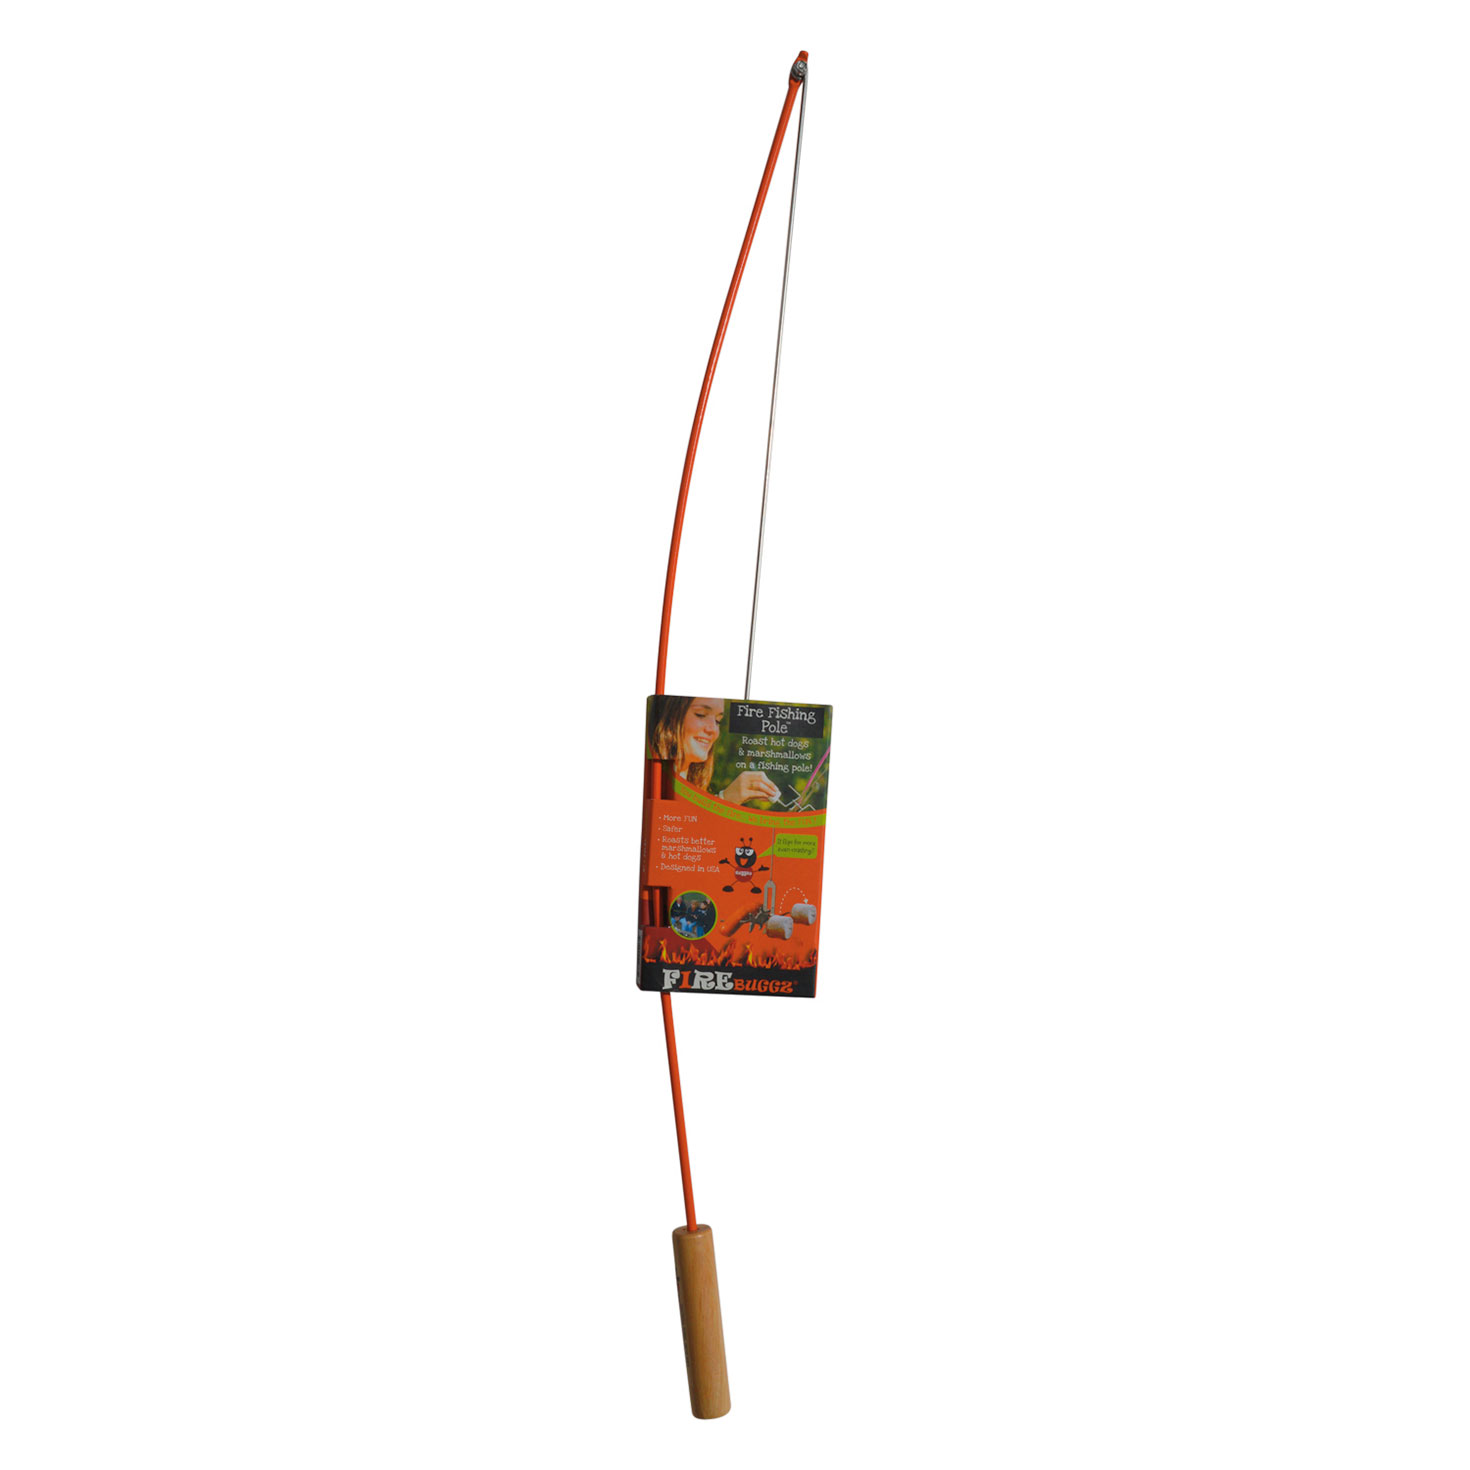 Firebuggz Fire Fishing Pole Campfire Roaster, Orange - Kitchen Accessories